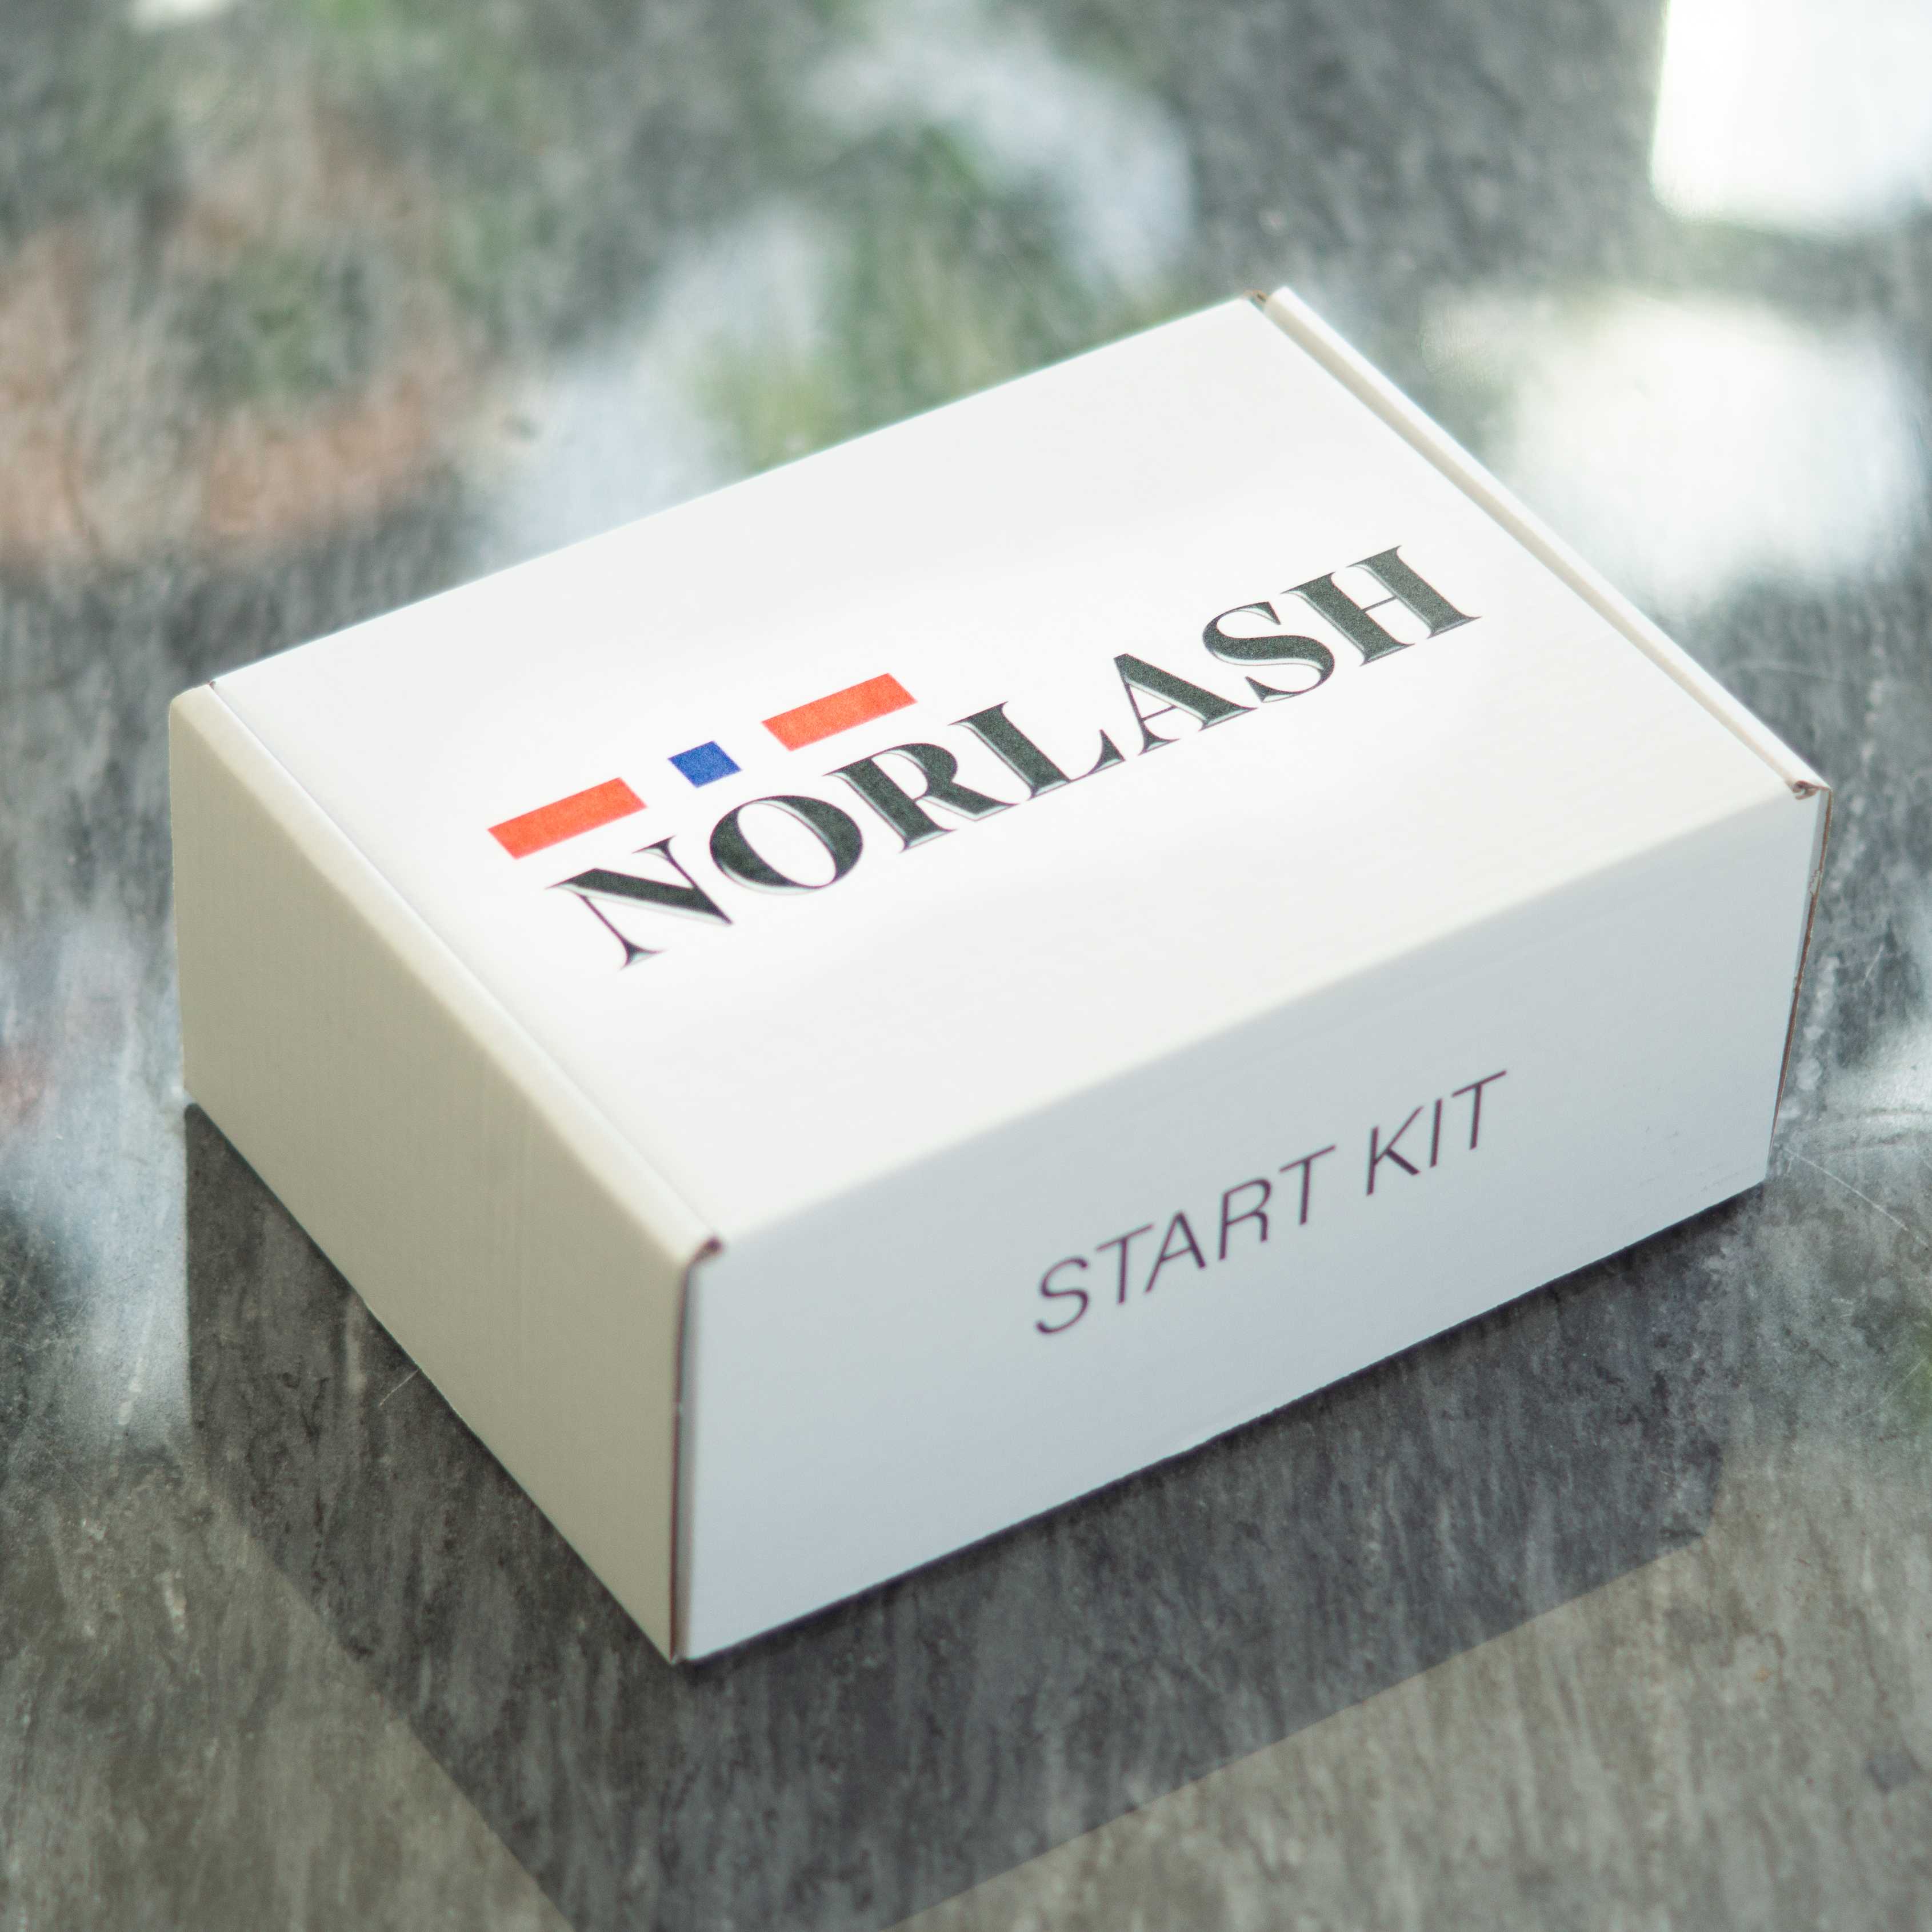 Norlash Start Kit, a white box with the norlash logo